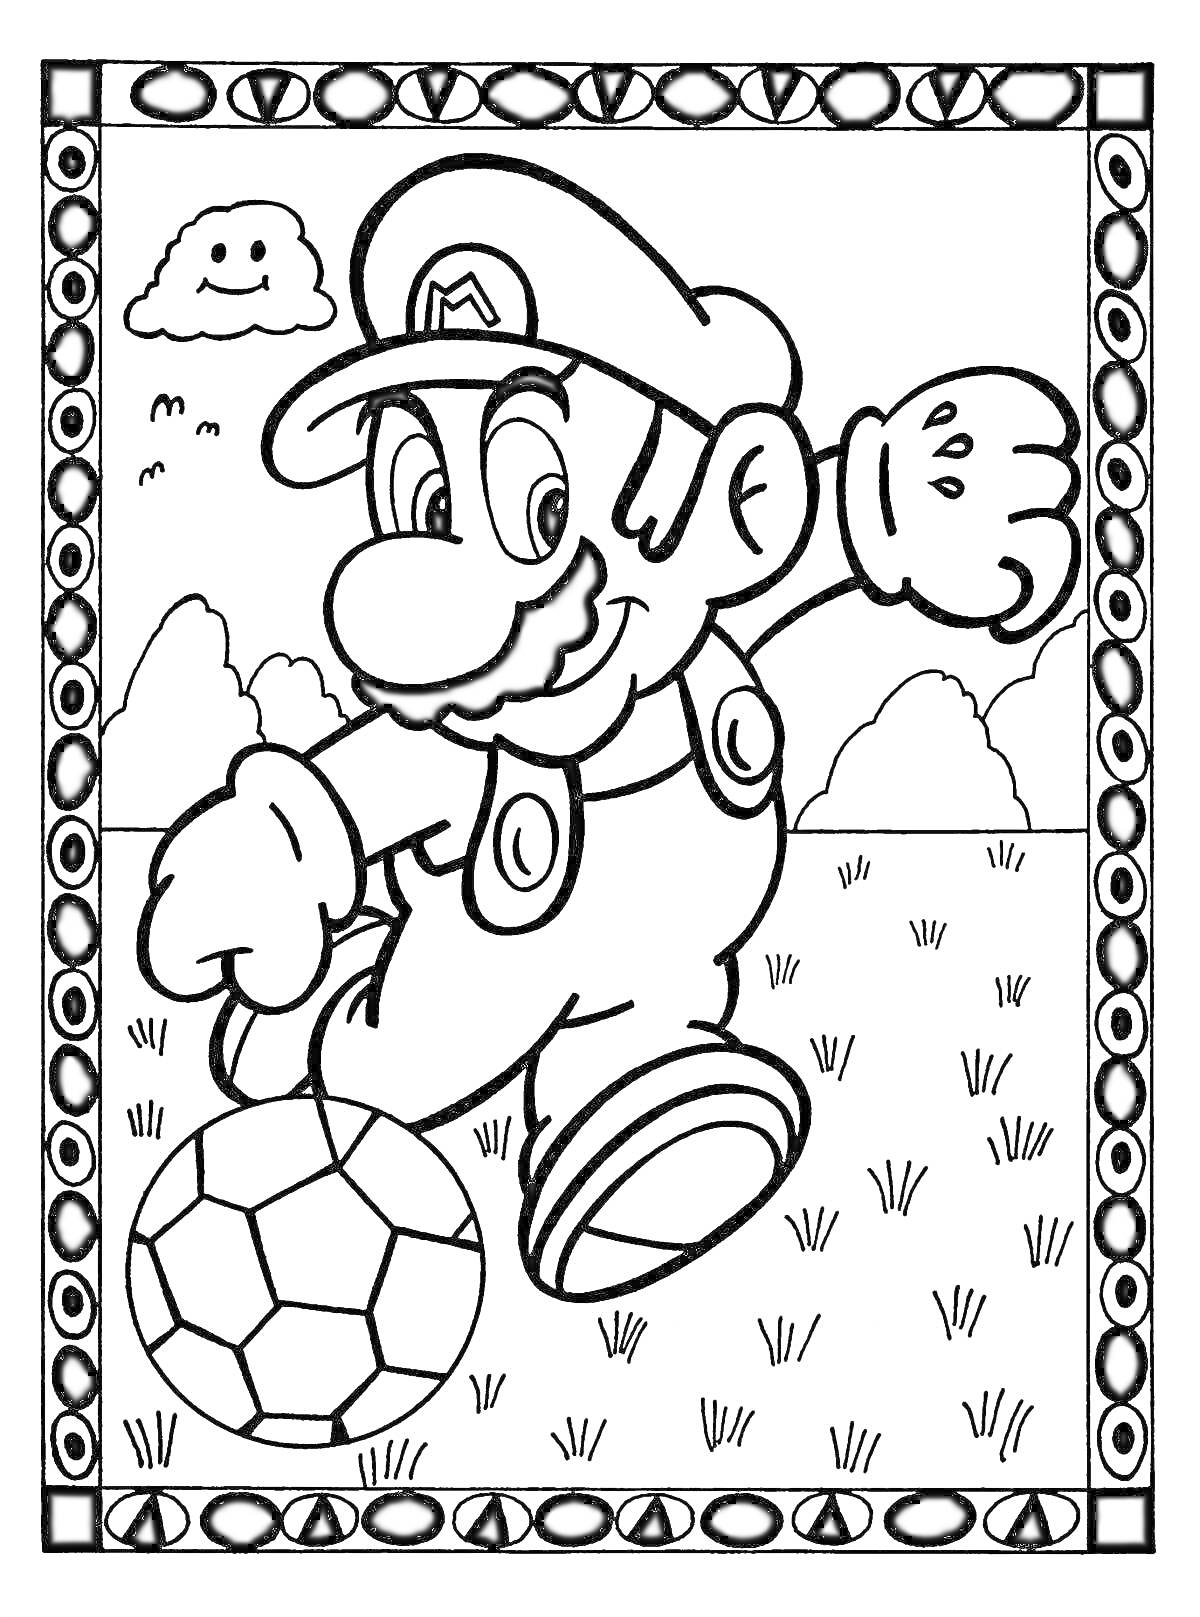 Раскраска Марио играет в футбол на поляне с облаком и горами, рисунок в рамке с узорами